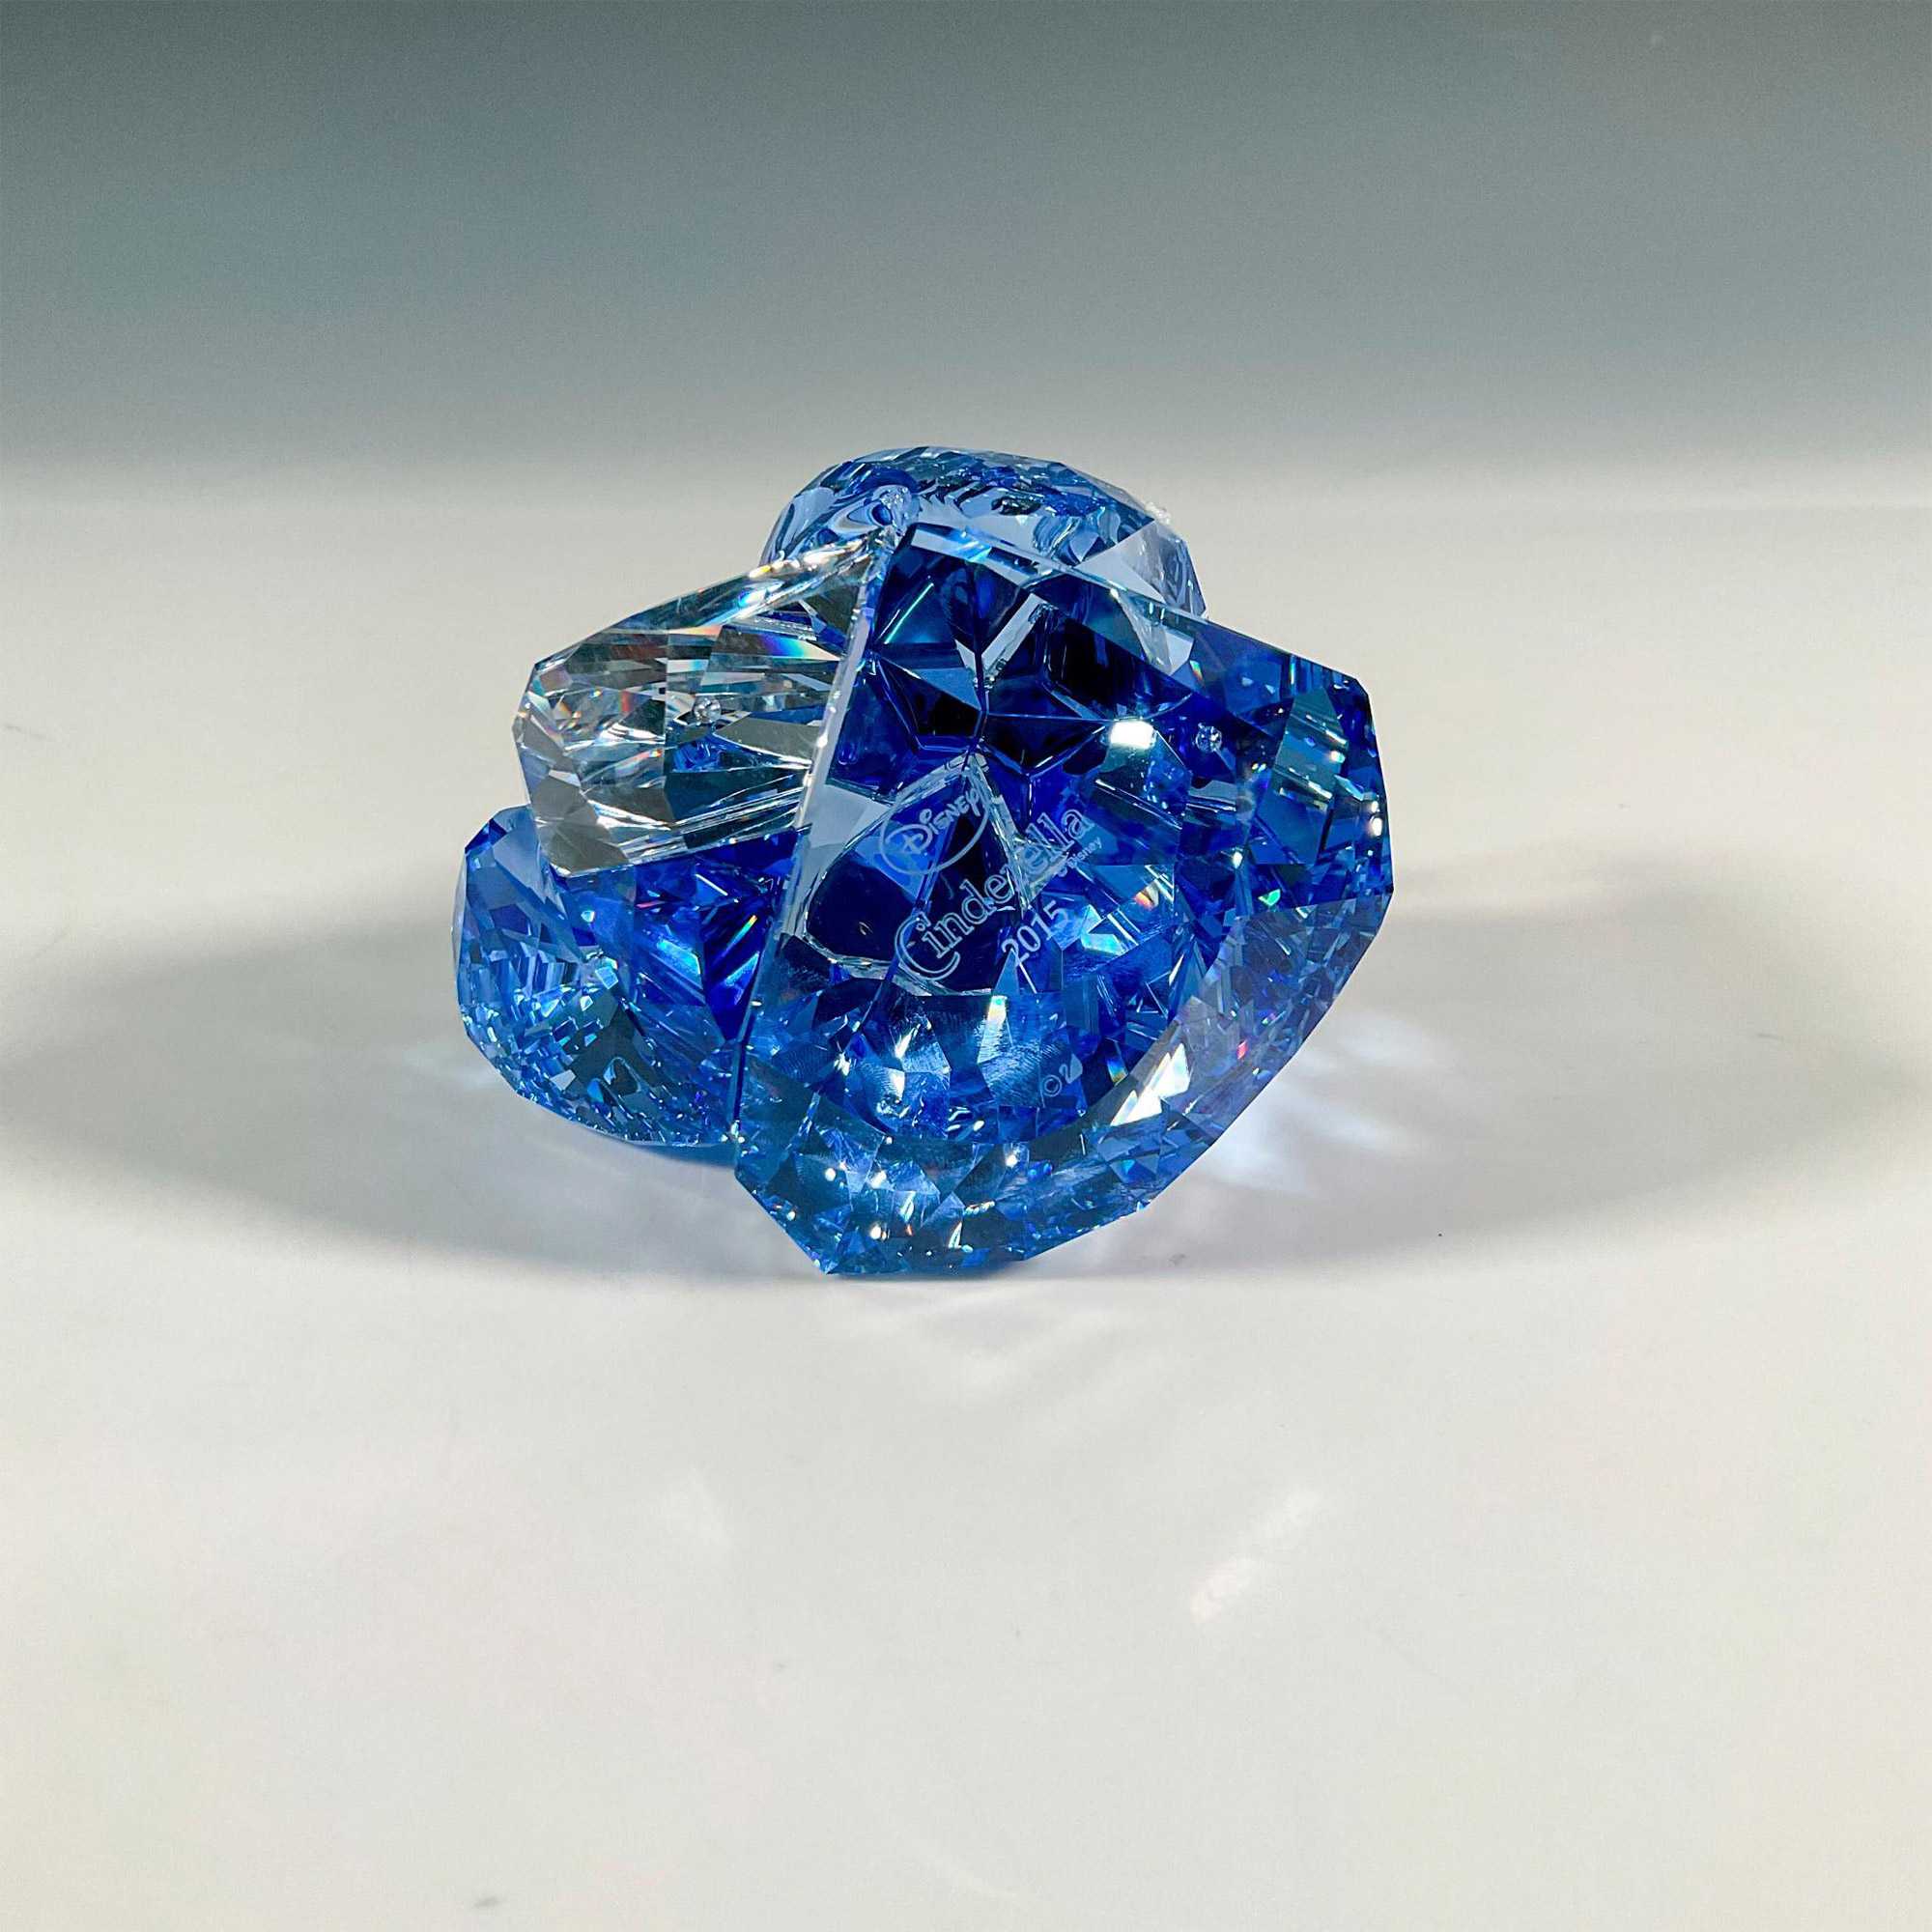 Swarovski Crystal Figurine, Cinderella Limited Edition - Image 3 of 4